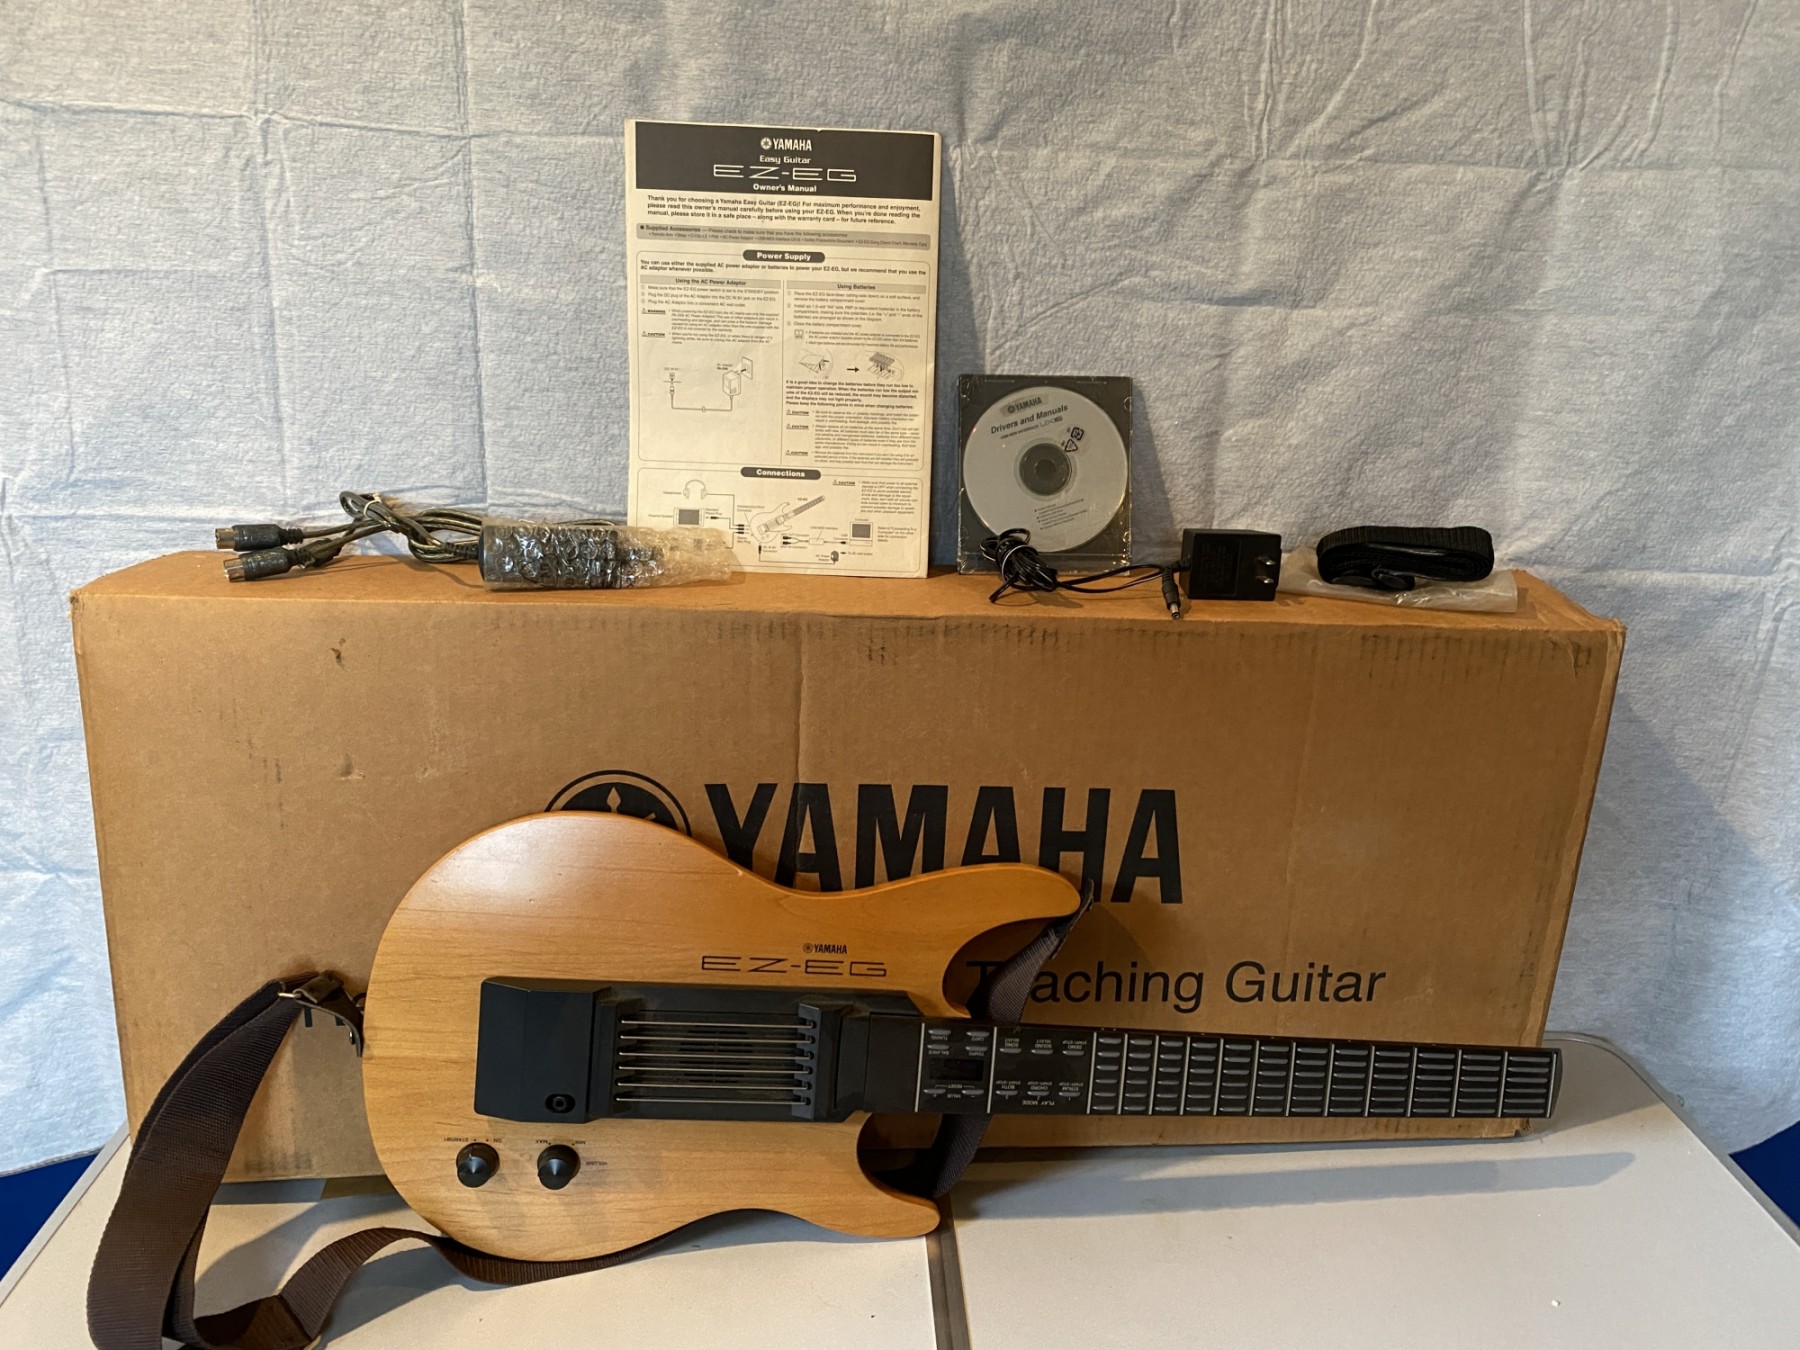 YAMAHA EZ-EG Refurbished Electronic Teaching Guitar With Box, CD